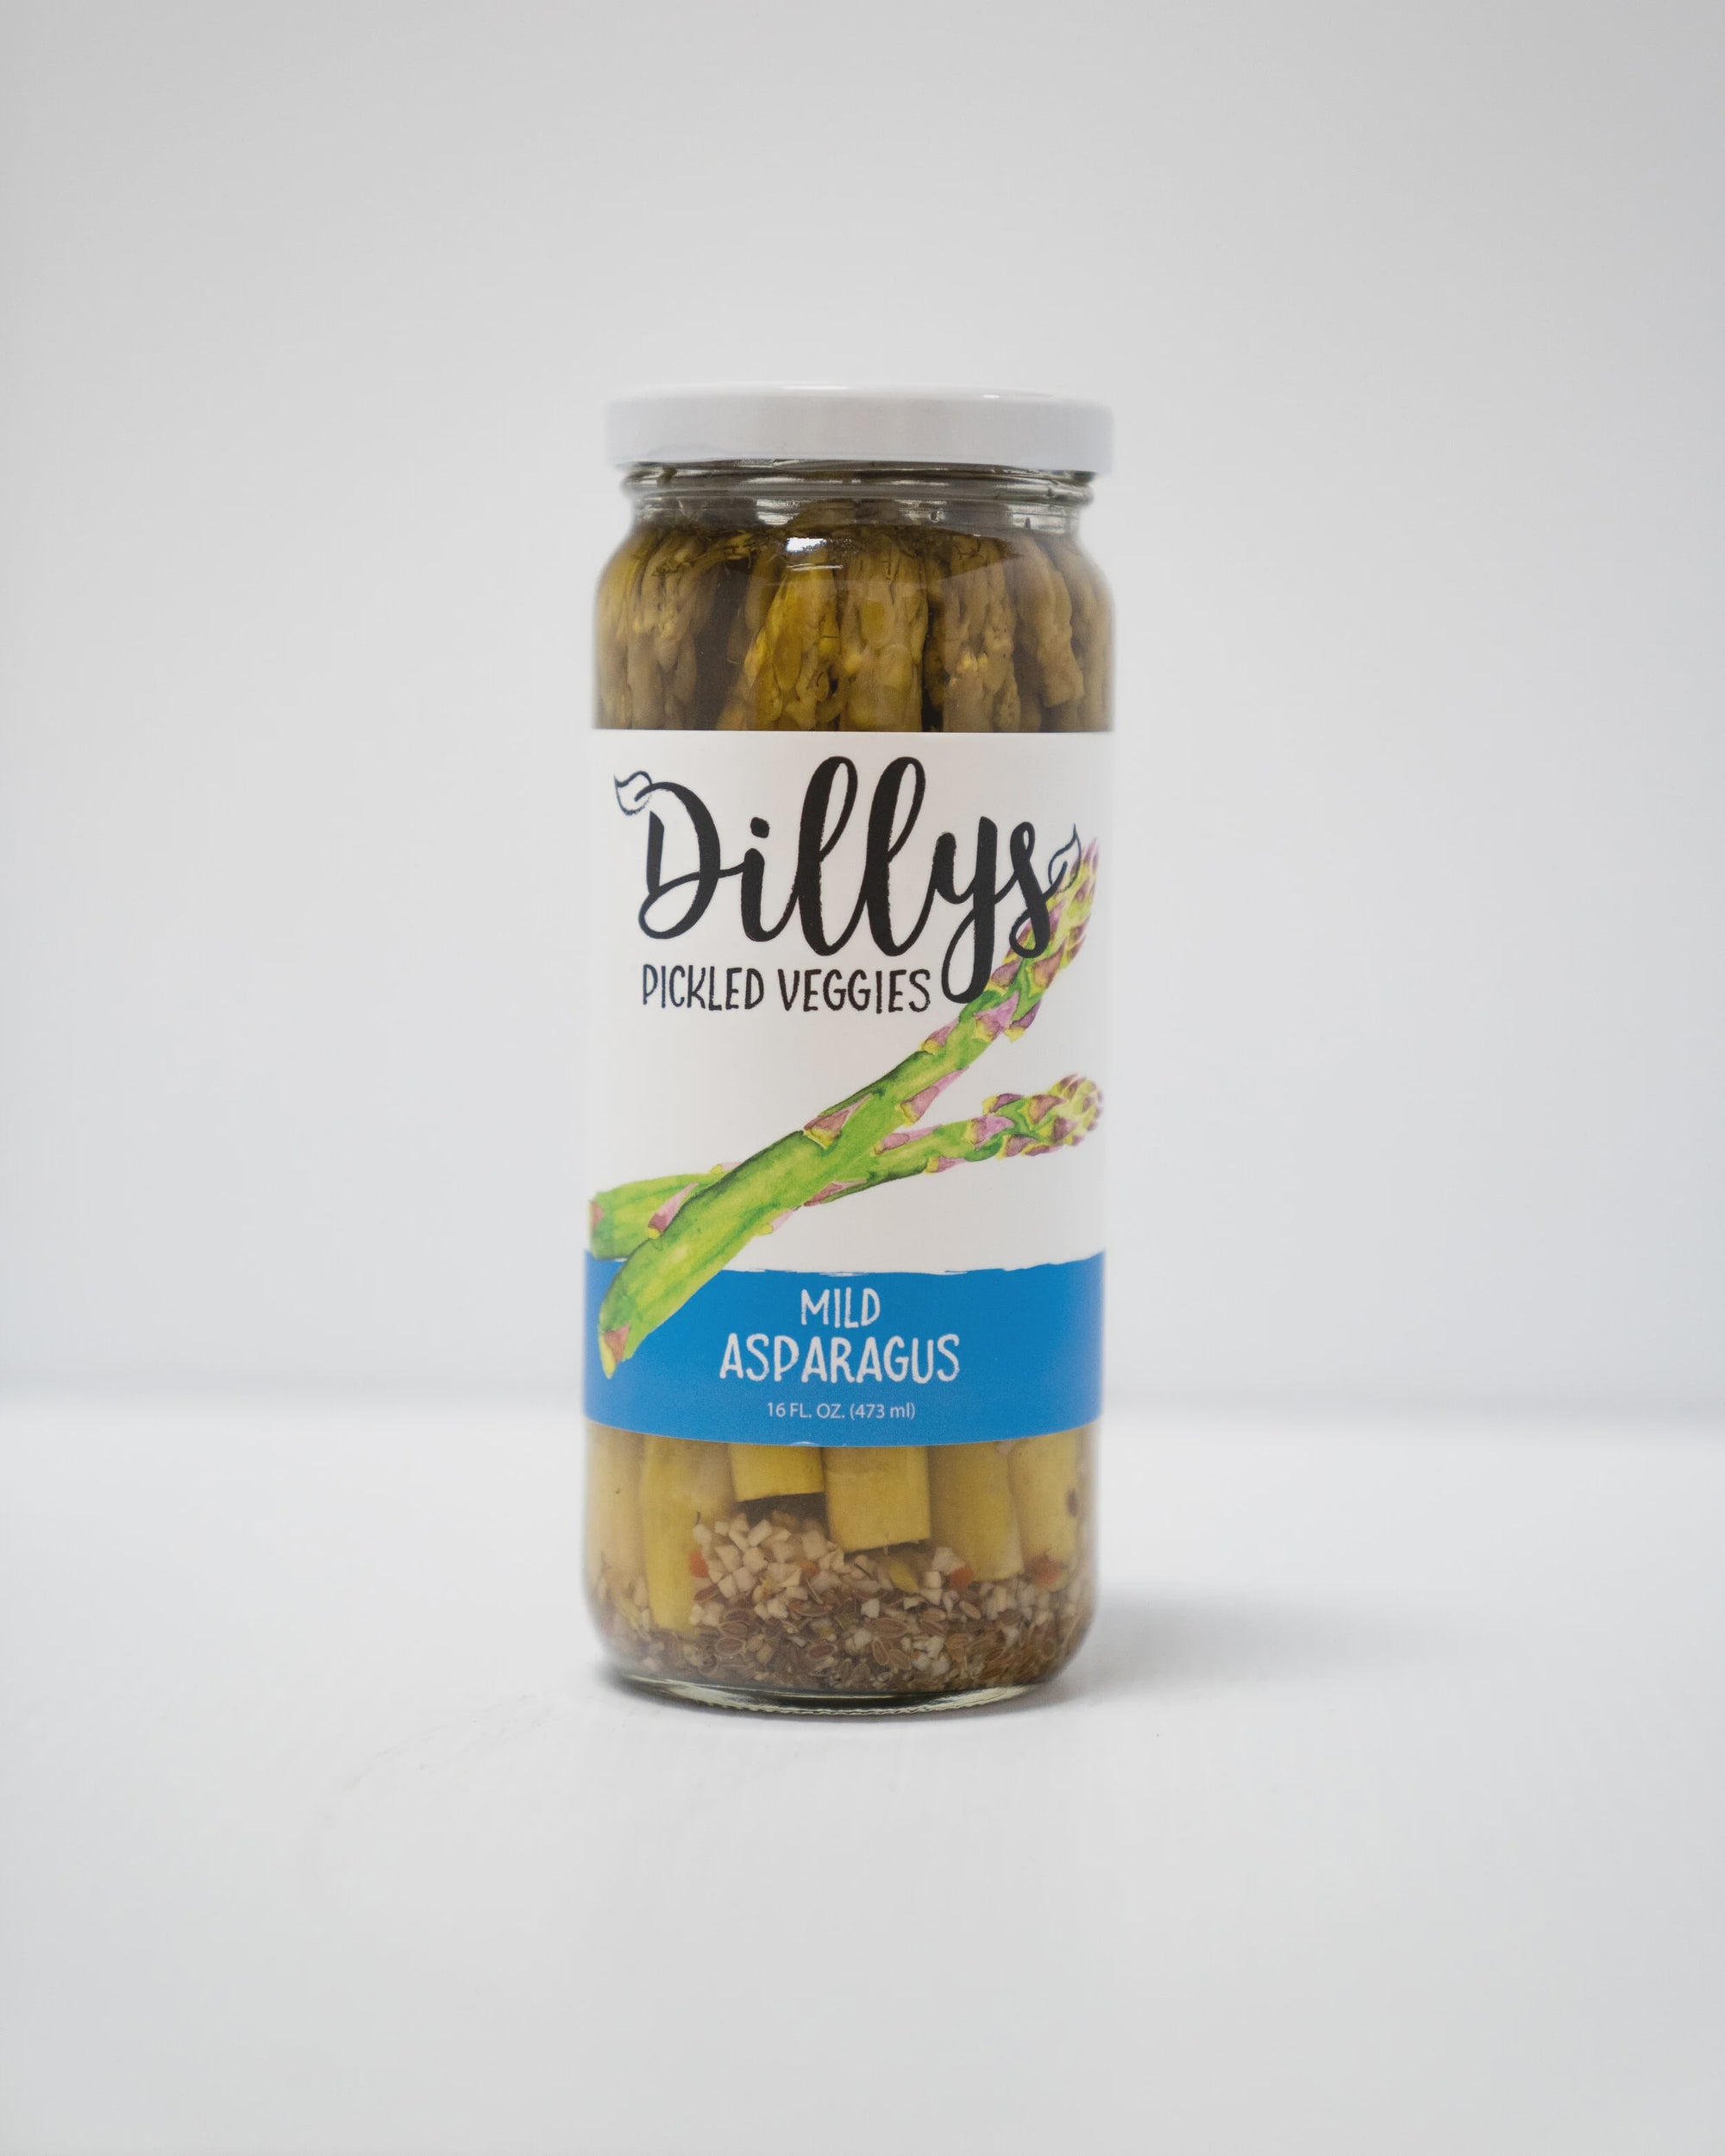 Dilly Pickled Veggies Mild Asparagus 16oz.